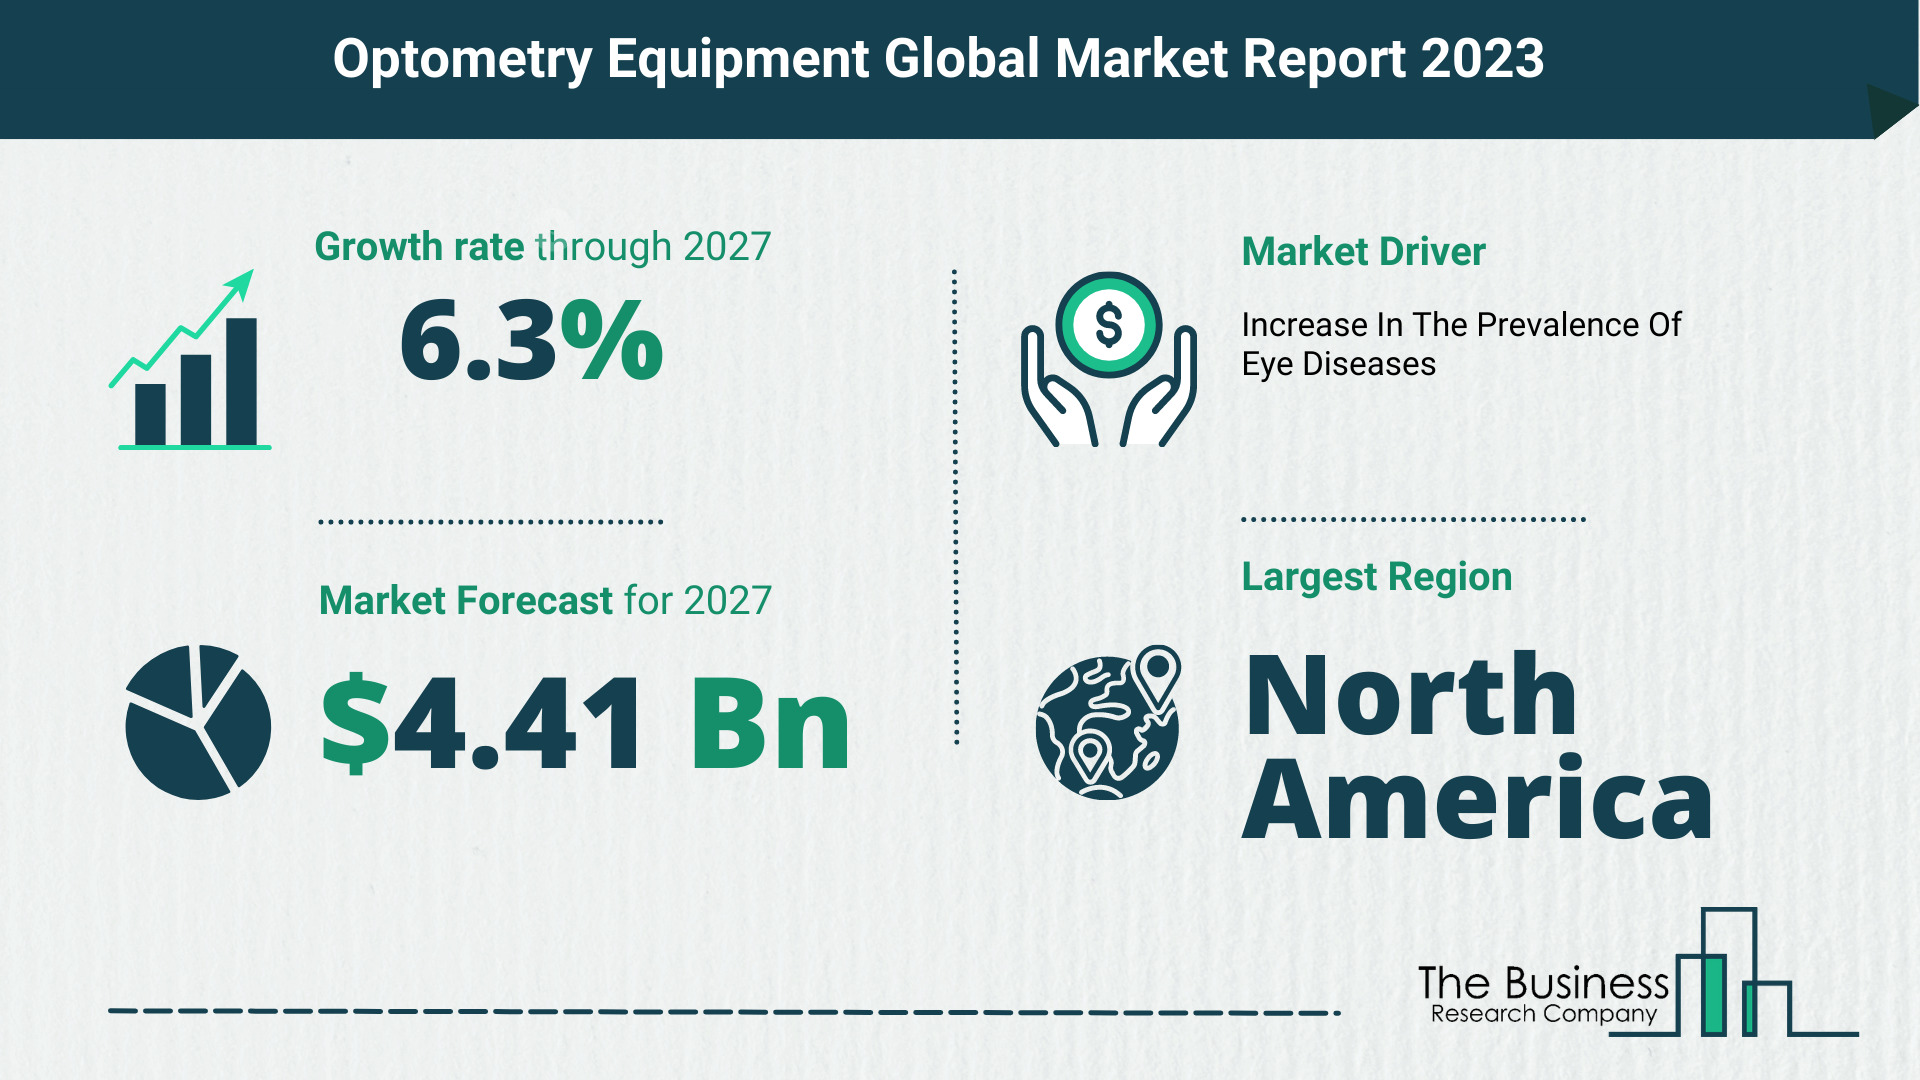 Global Optometry Equipment Market